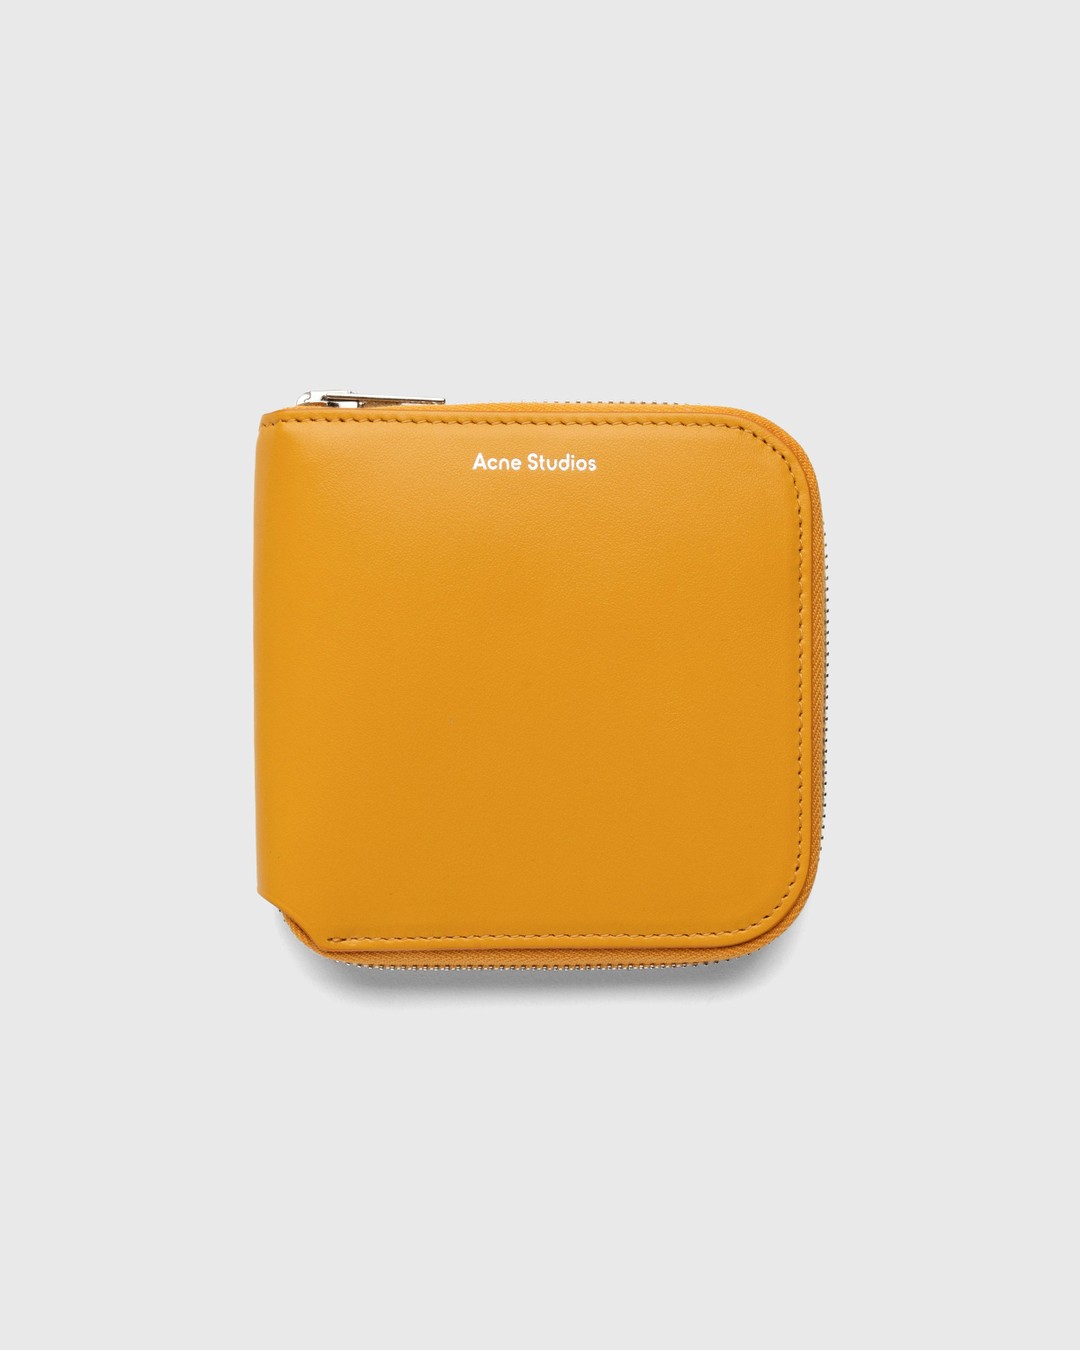 Acne Studios – Leather Zip Wallet Orange - Wallets - Orange - Image 1